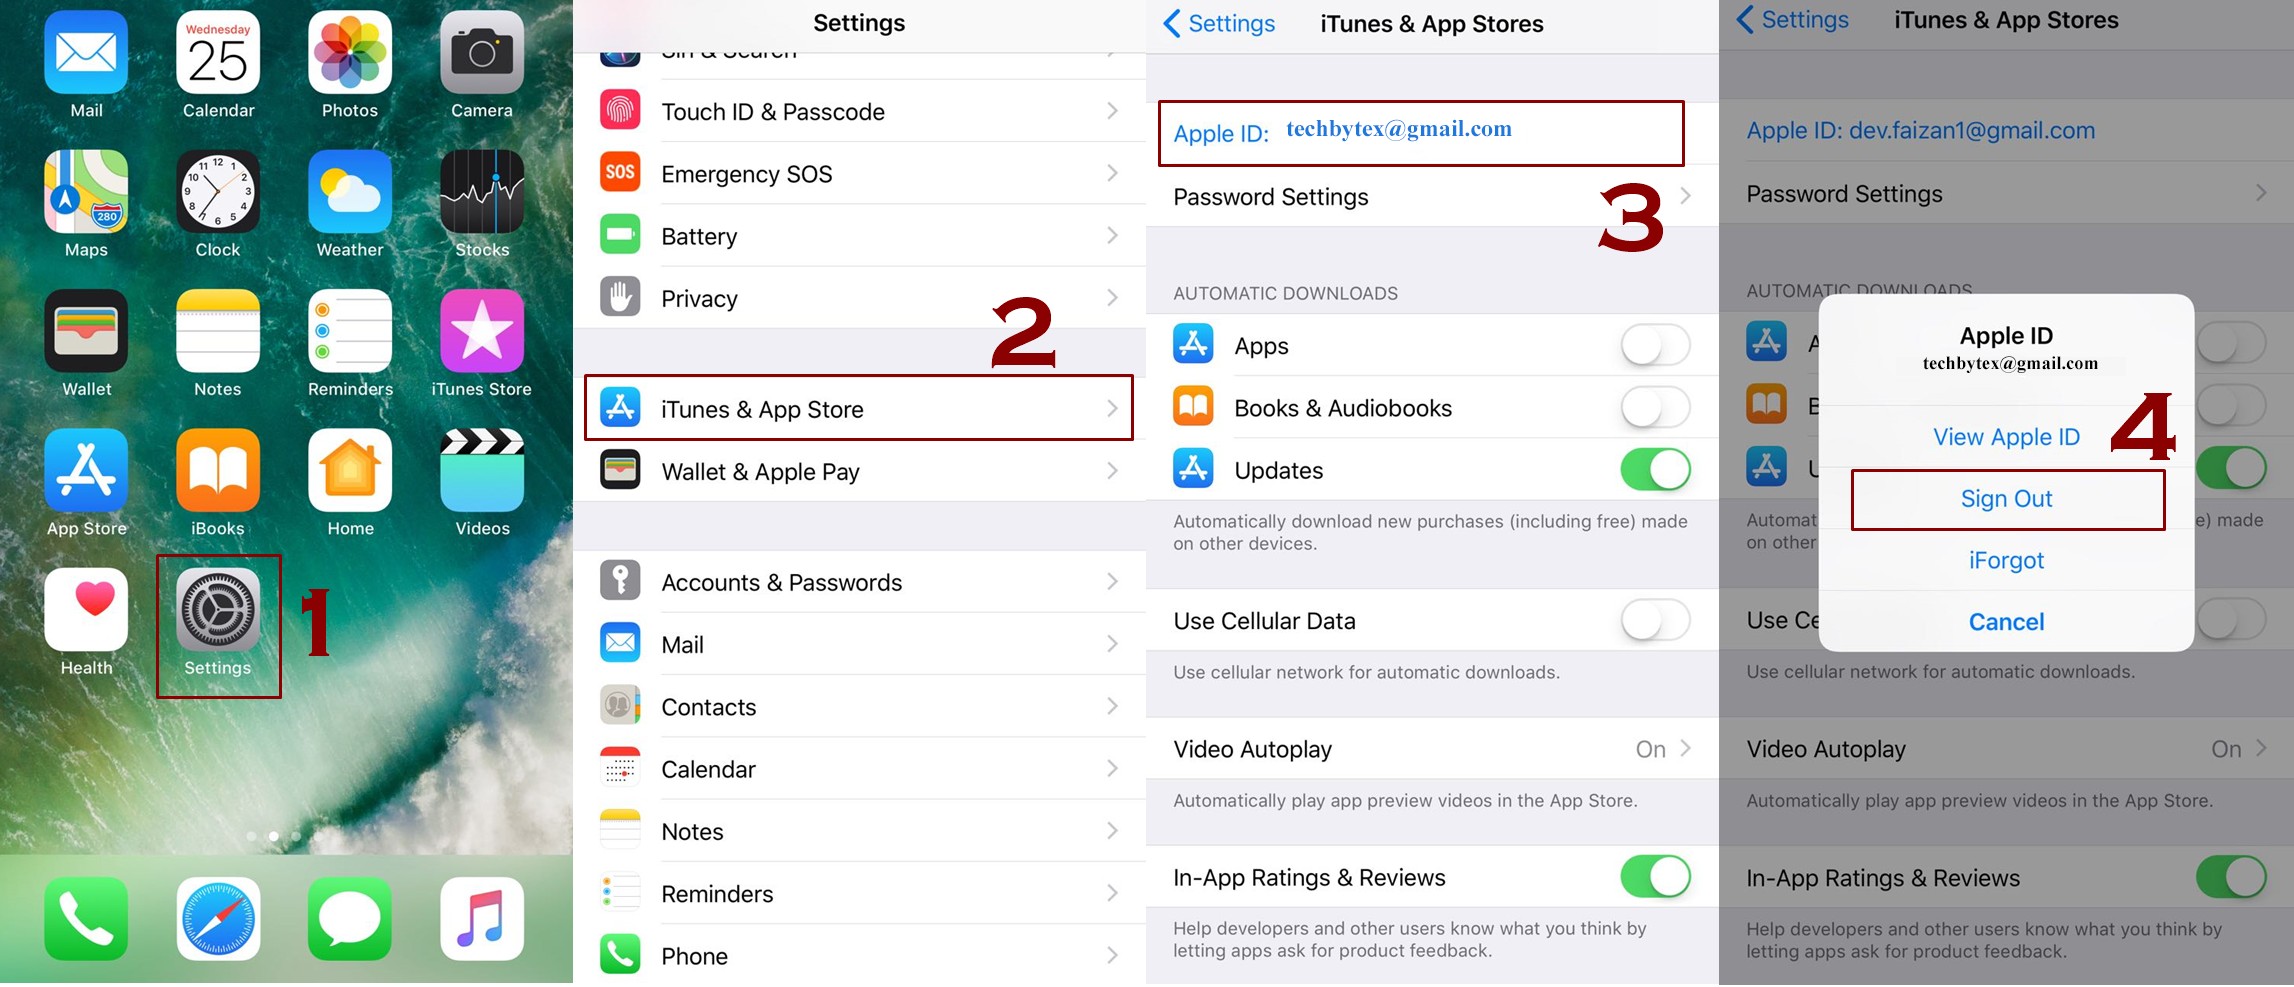 how to change apple id on iphone - Homepage